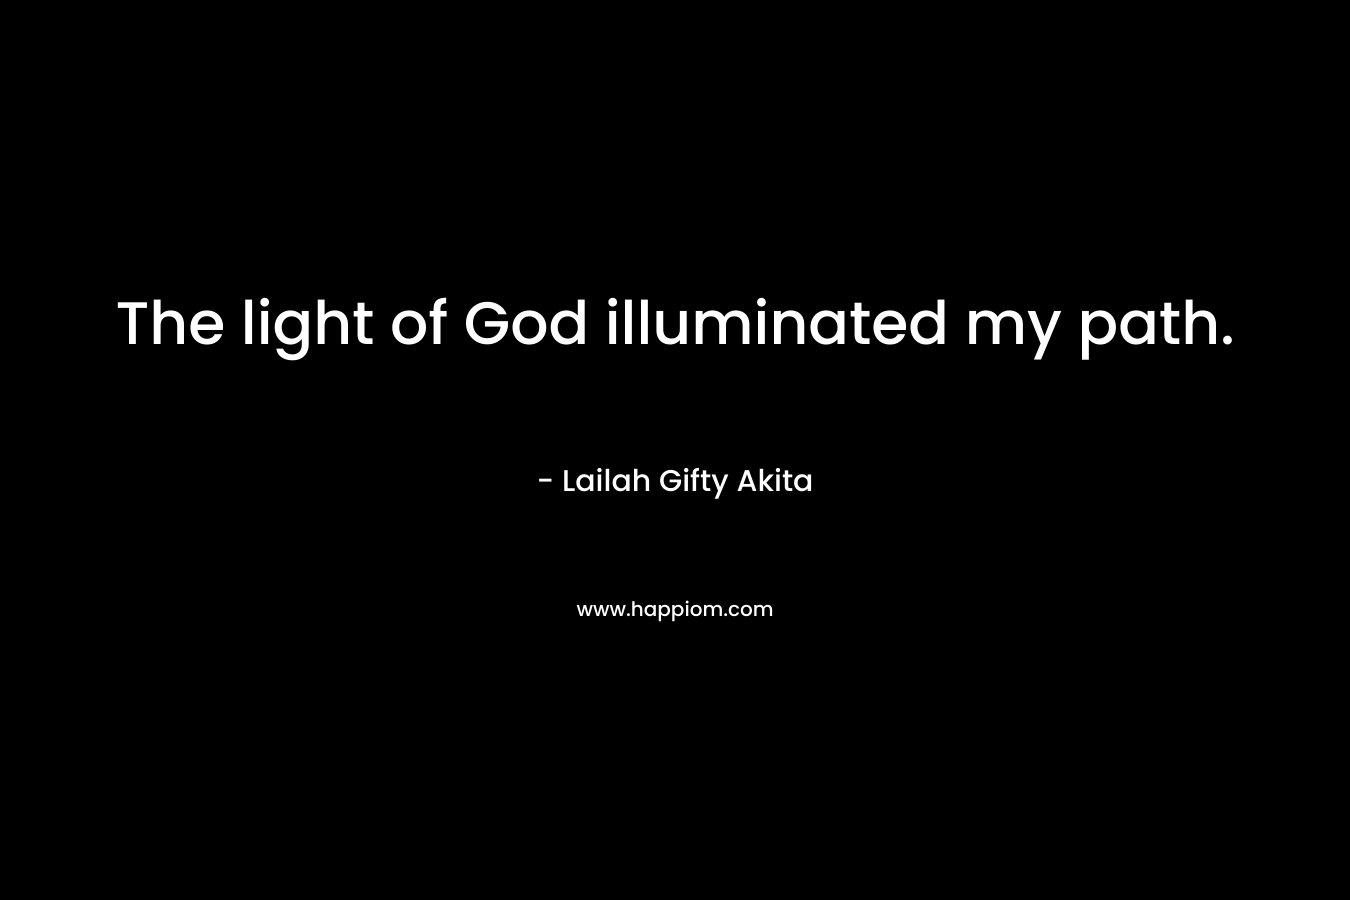 The light of God illuminated my path.